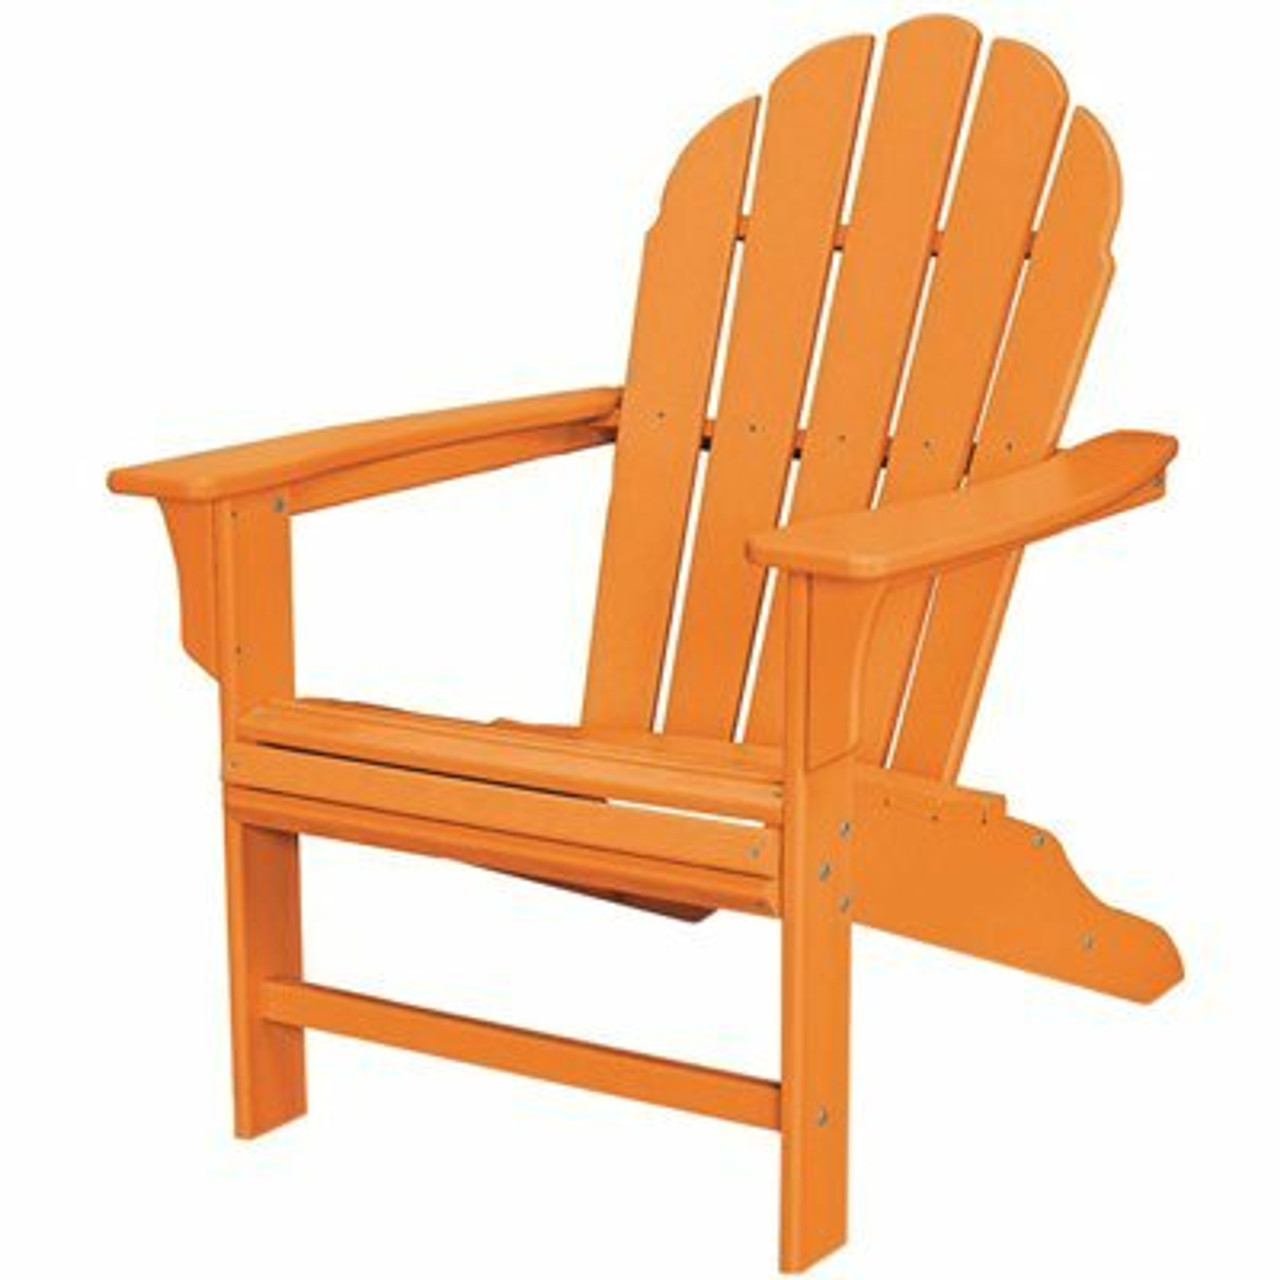 Trex Outdoor Furniture Hd Tangerine Plastic Patio Adirondack Chair